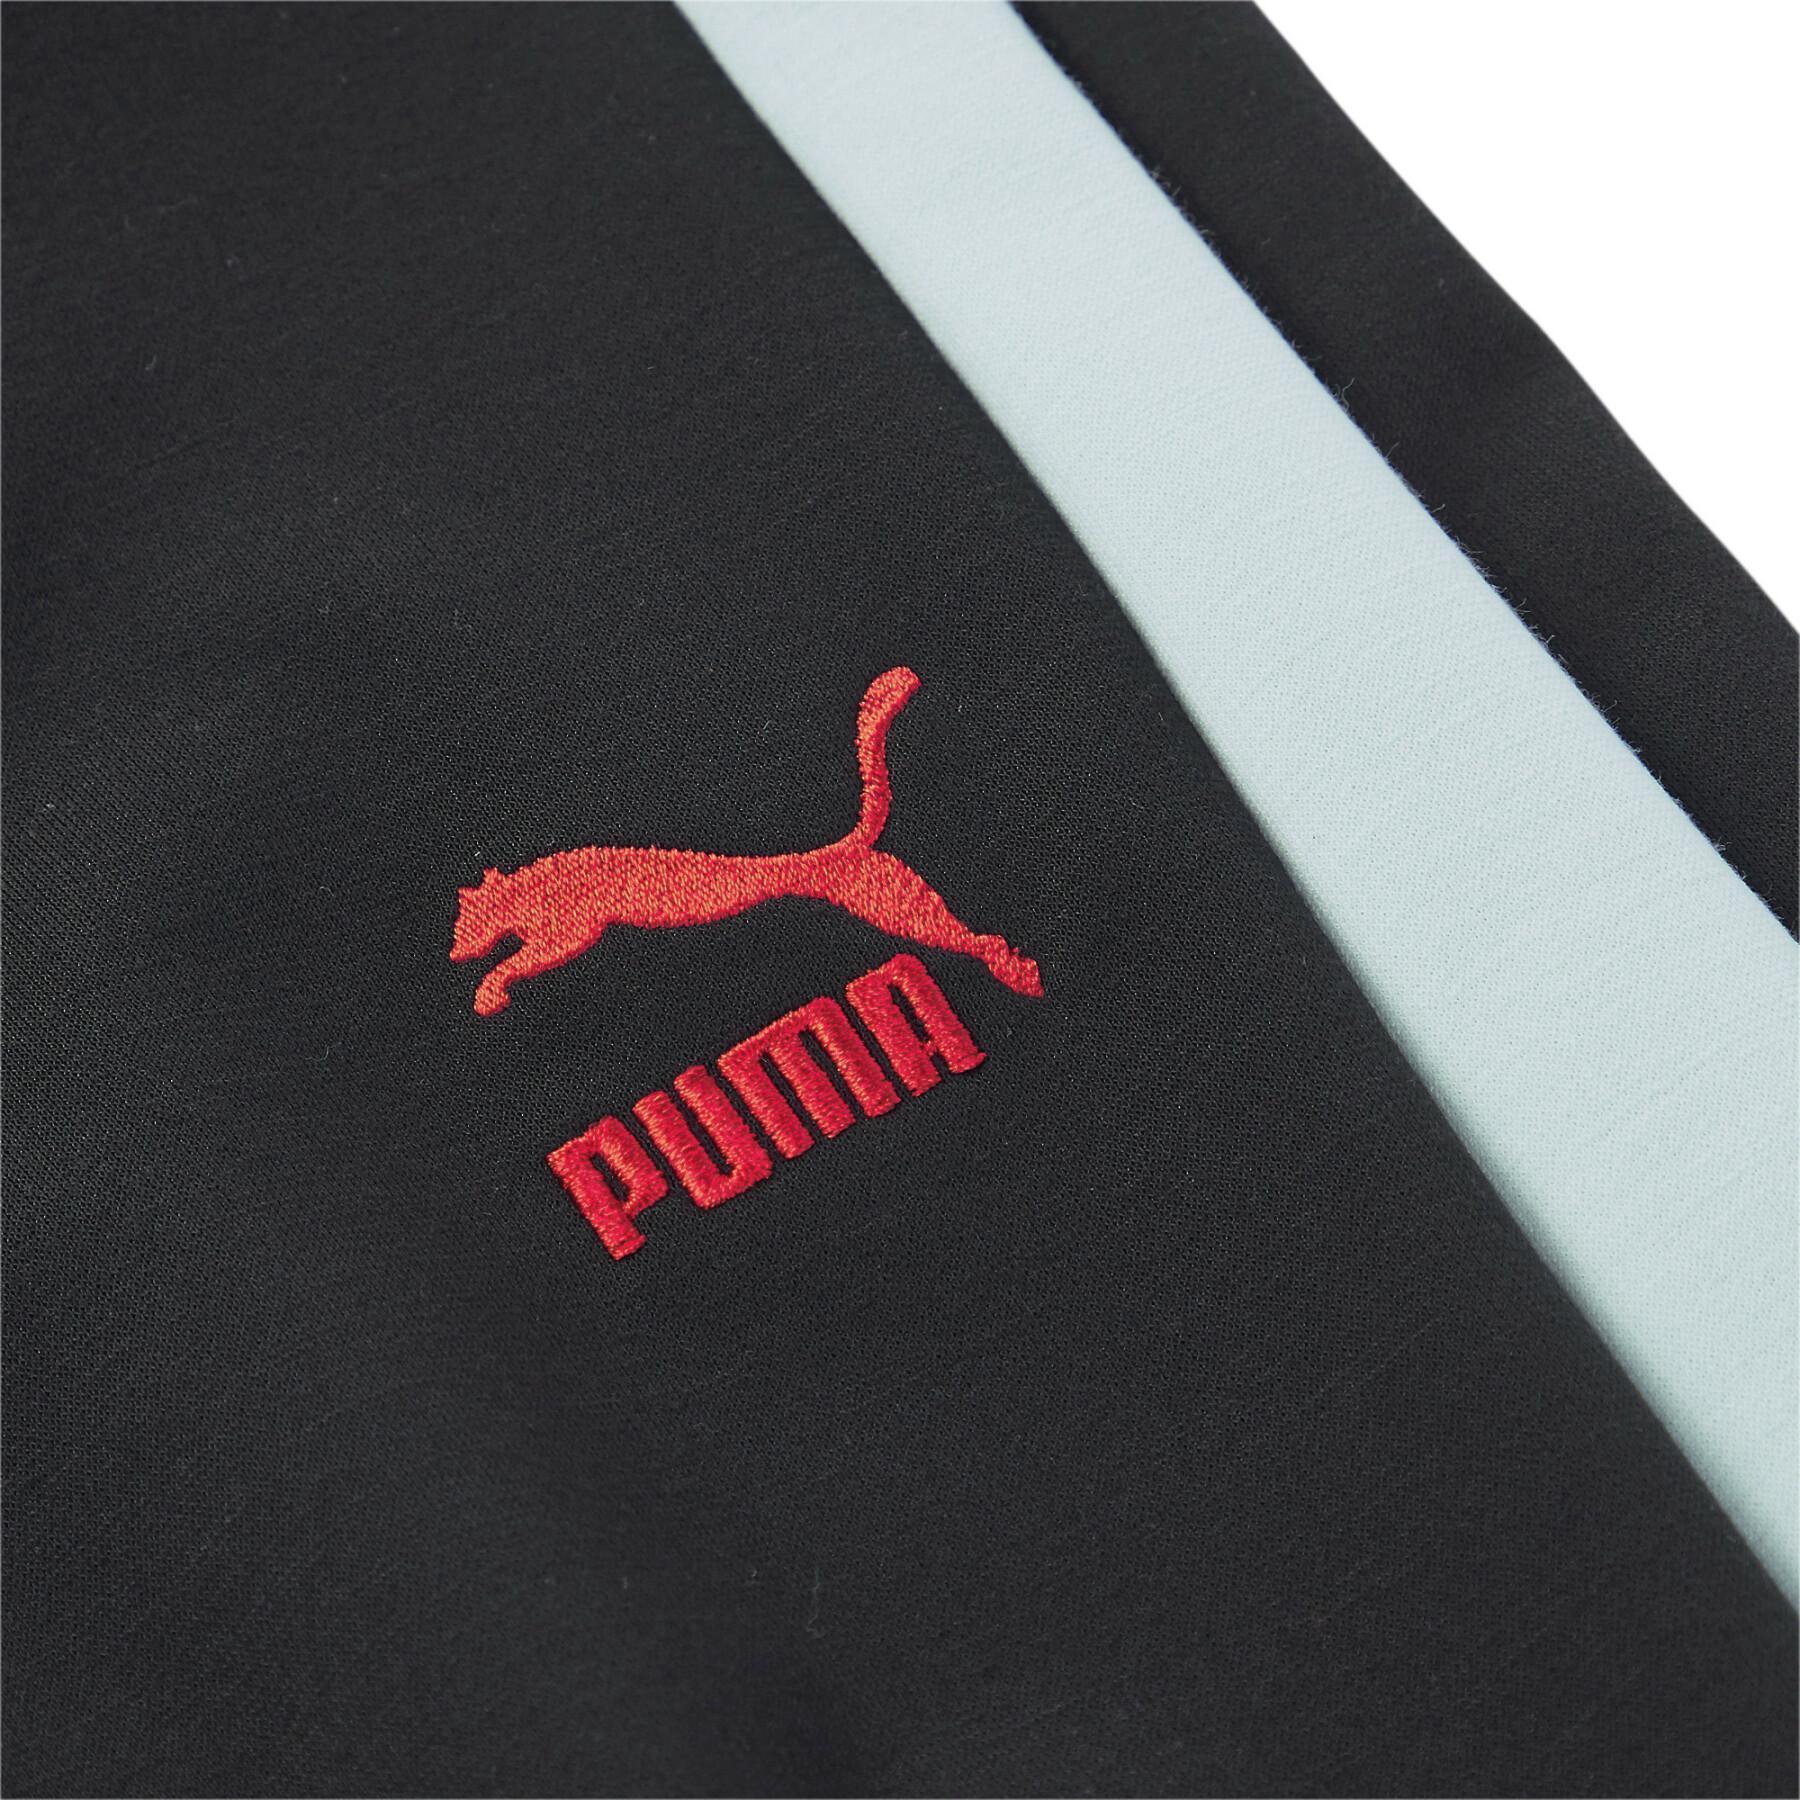 Women's jogging suit Puma X dua lipa T7